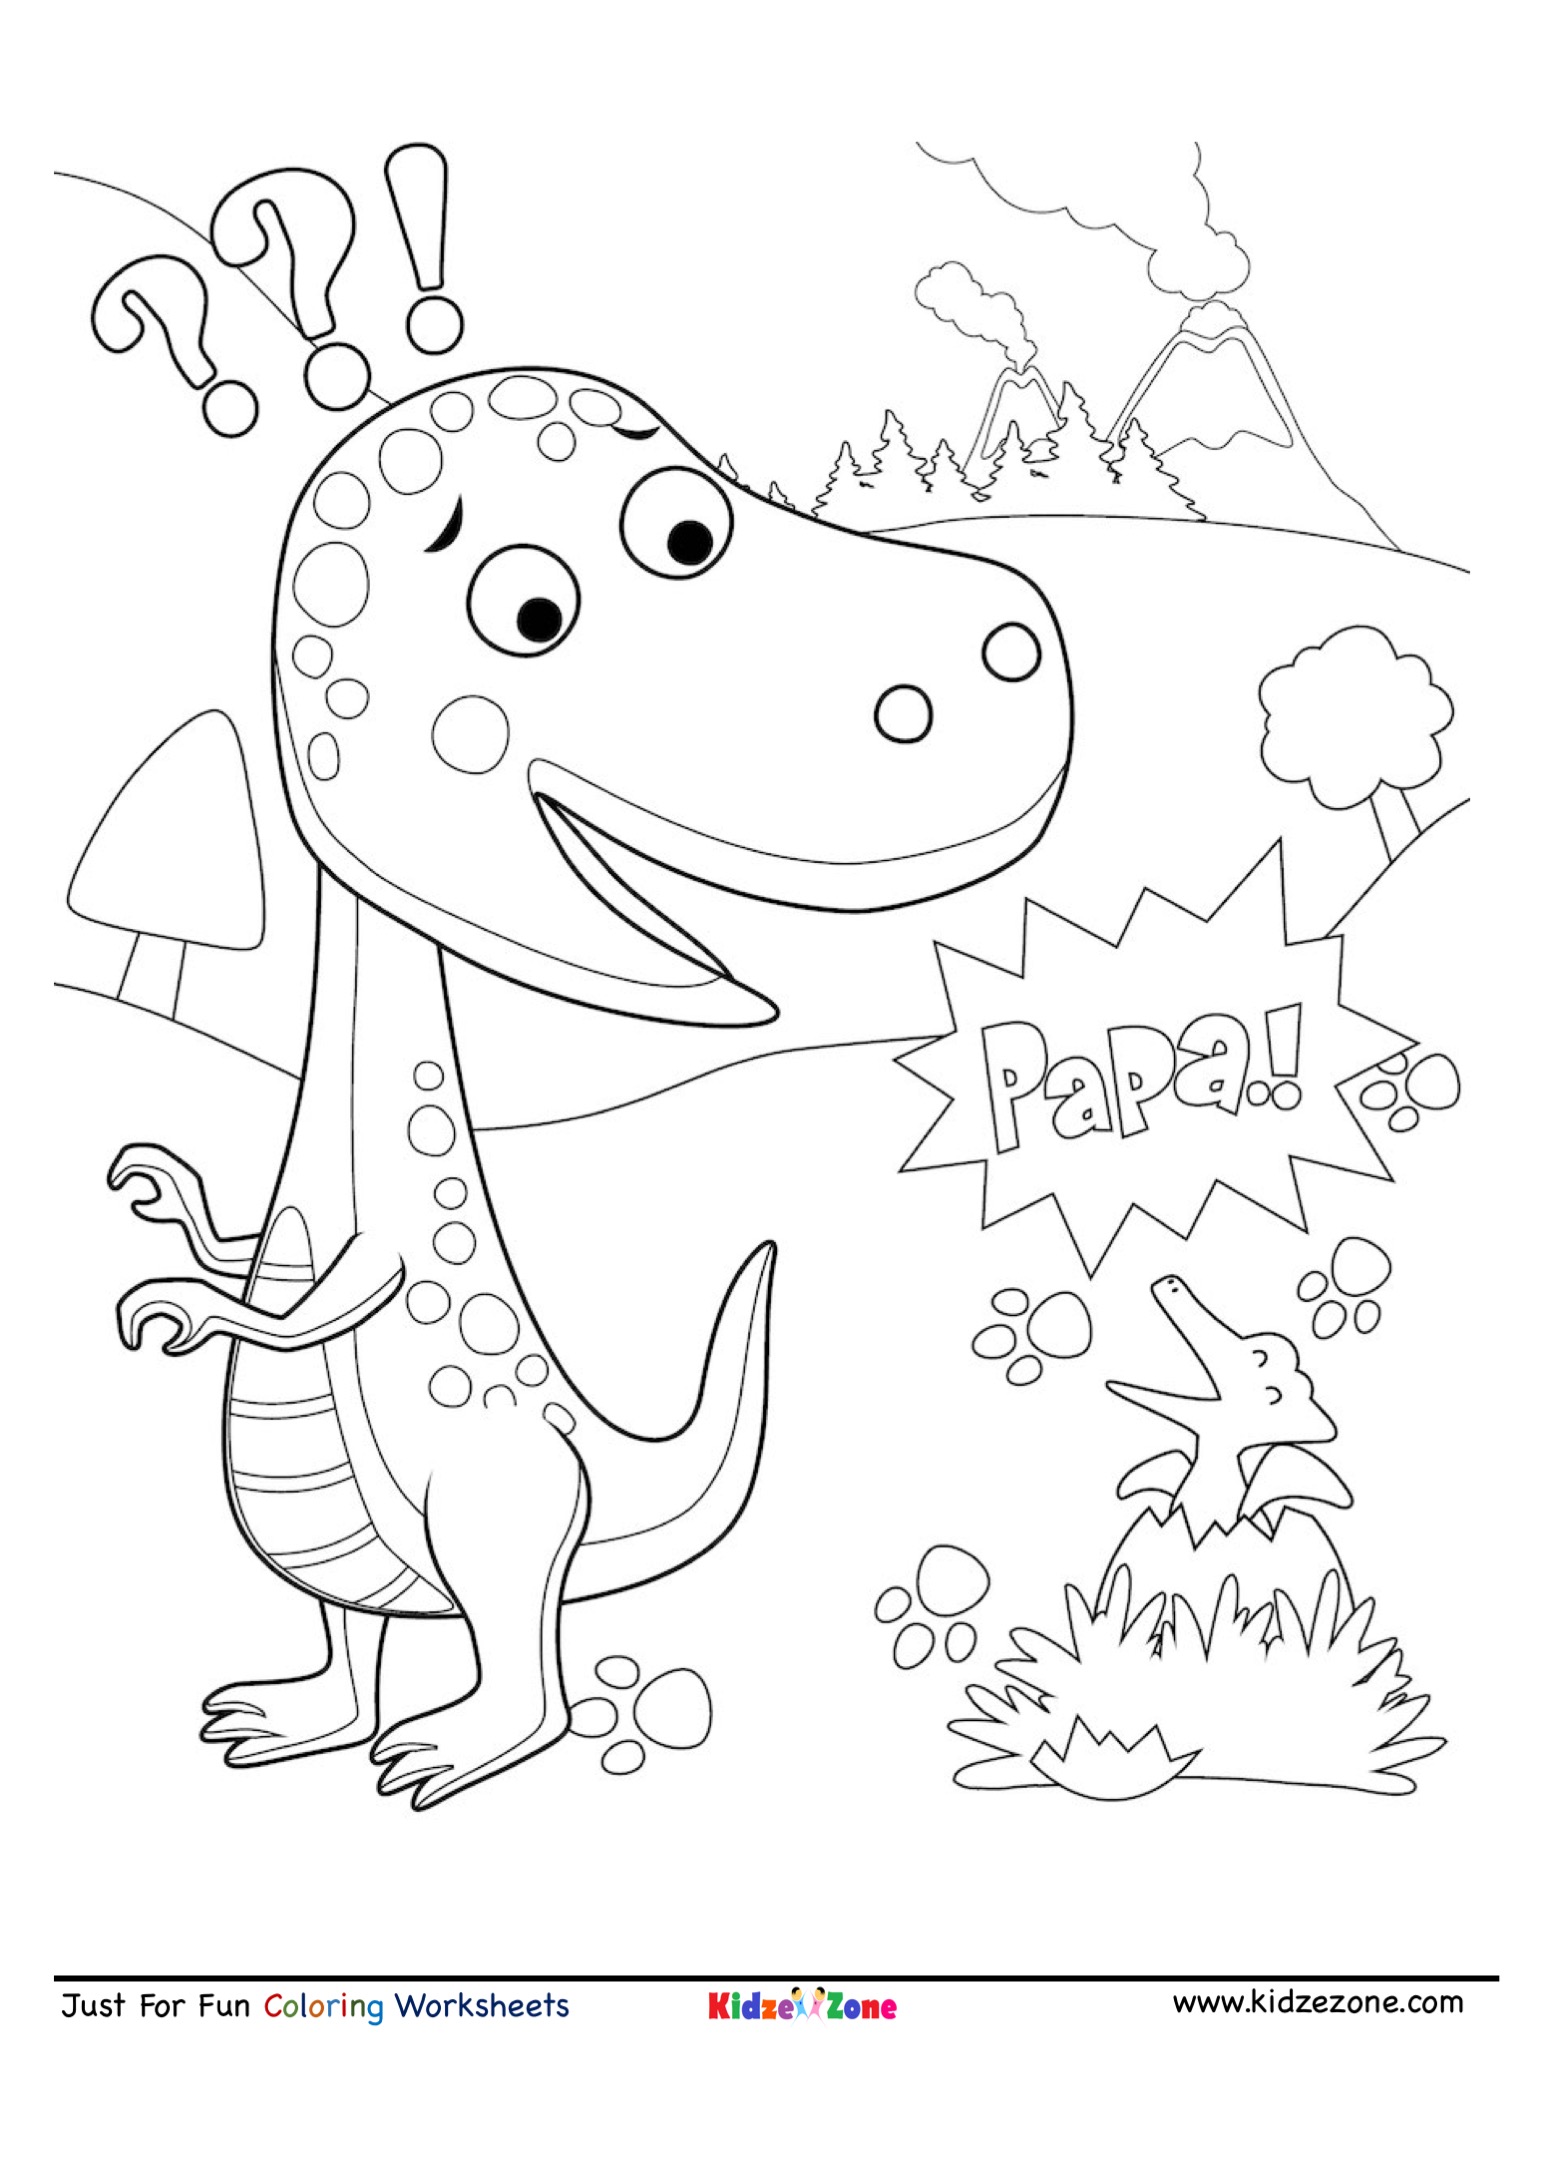 Download Dinosour egg hatching cartoon coloring page - KidzeZone